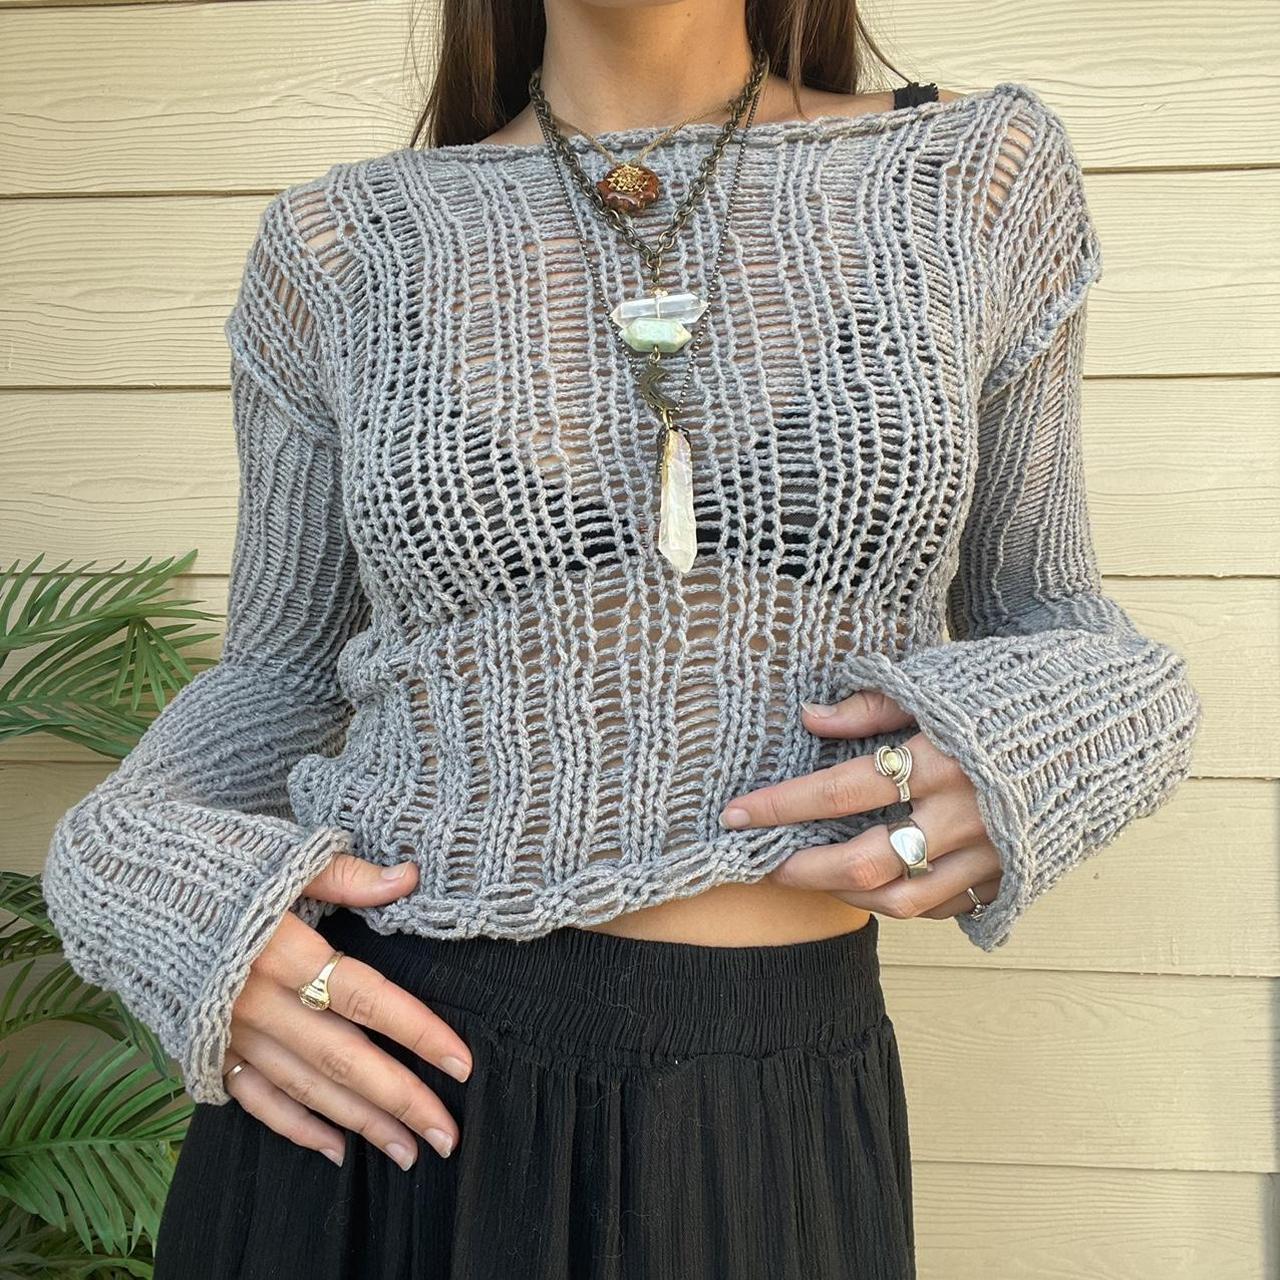 Handmade Knit Deconstructed Sweater 💌 FREE... - Depop